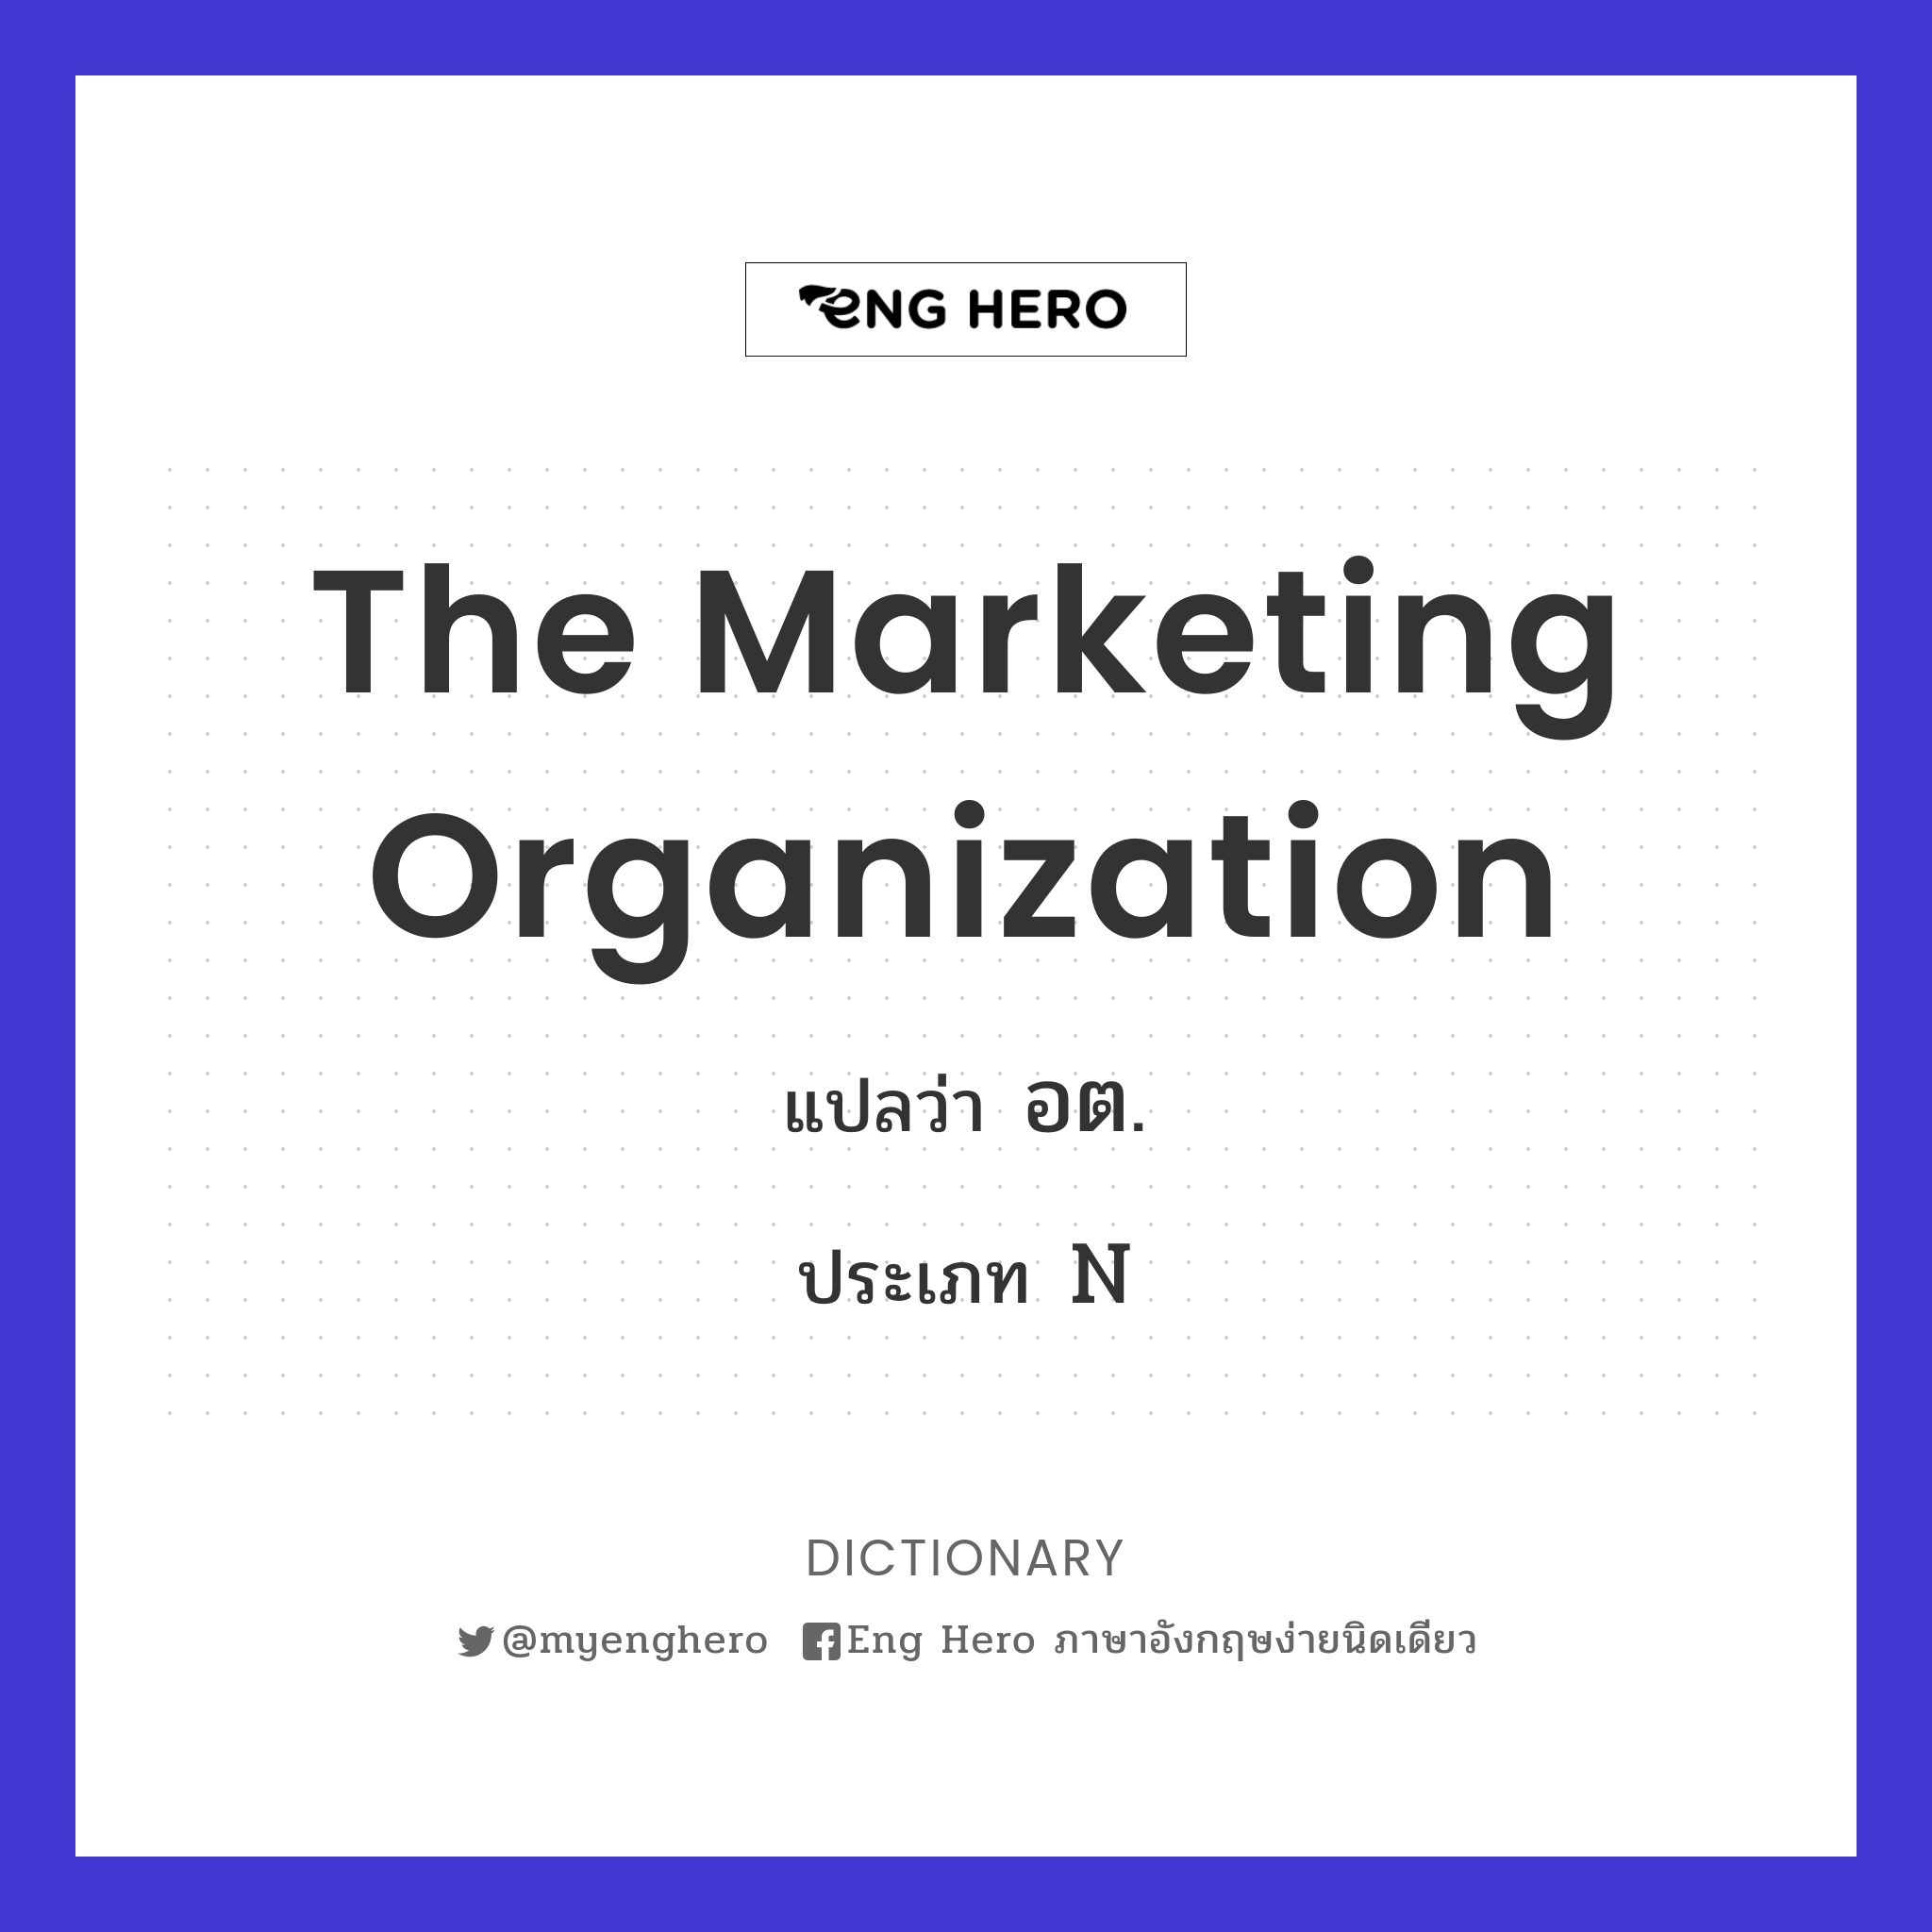 The Marketing Organization